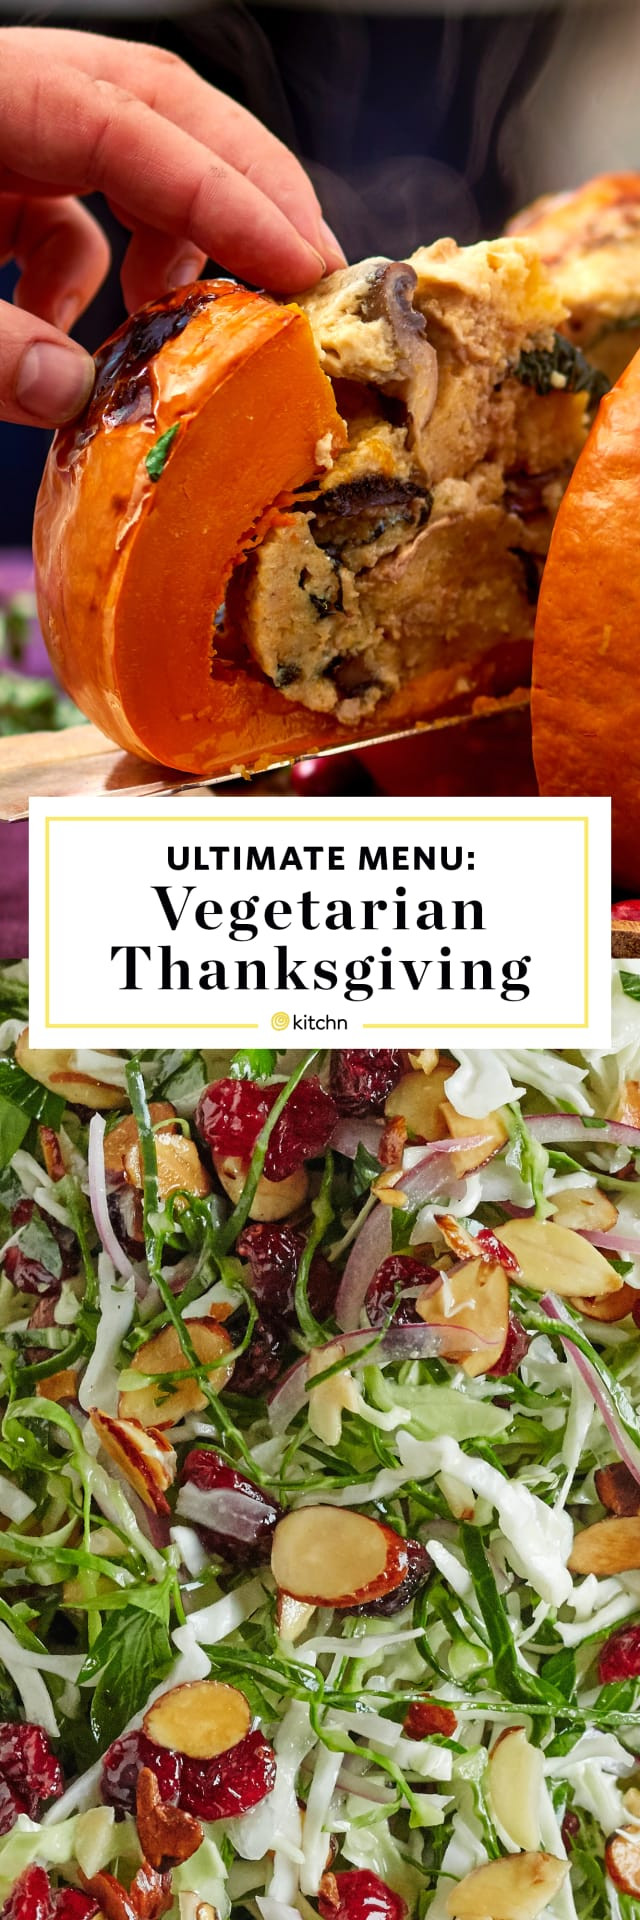 Vegetarian Thanksgiving Menu
 Our Best Ve arian Thanksgiving Menu